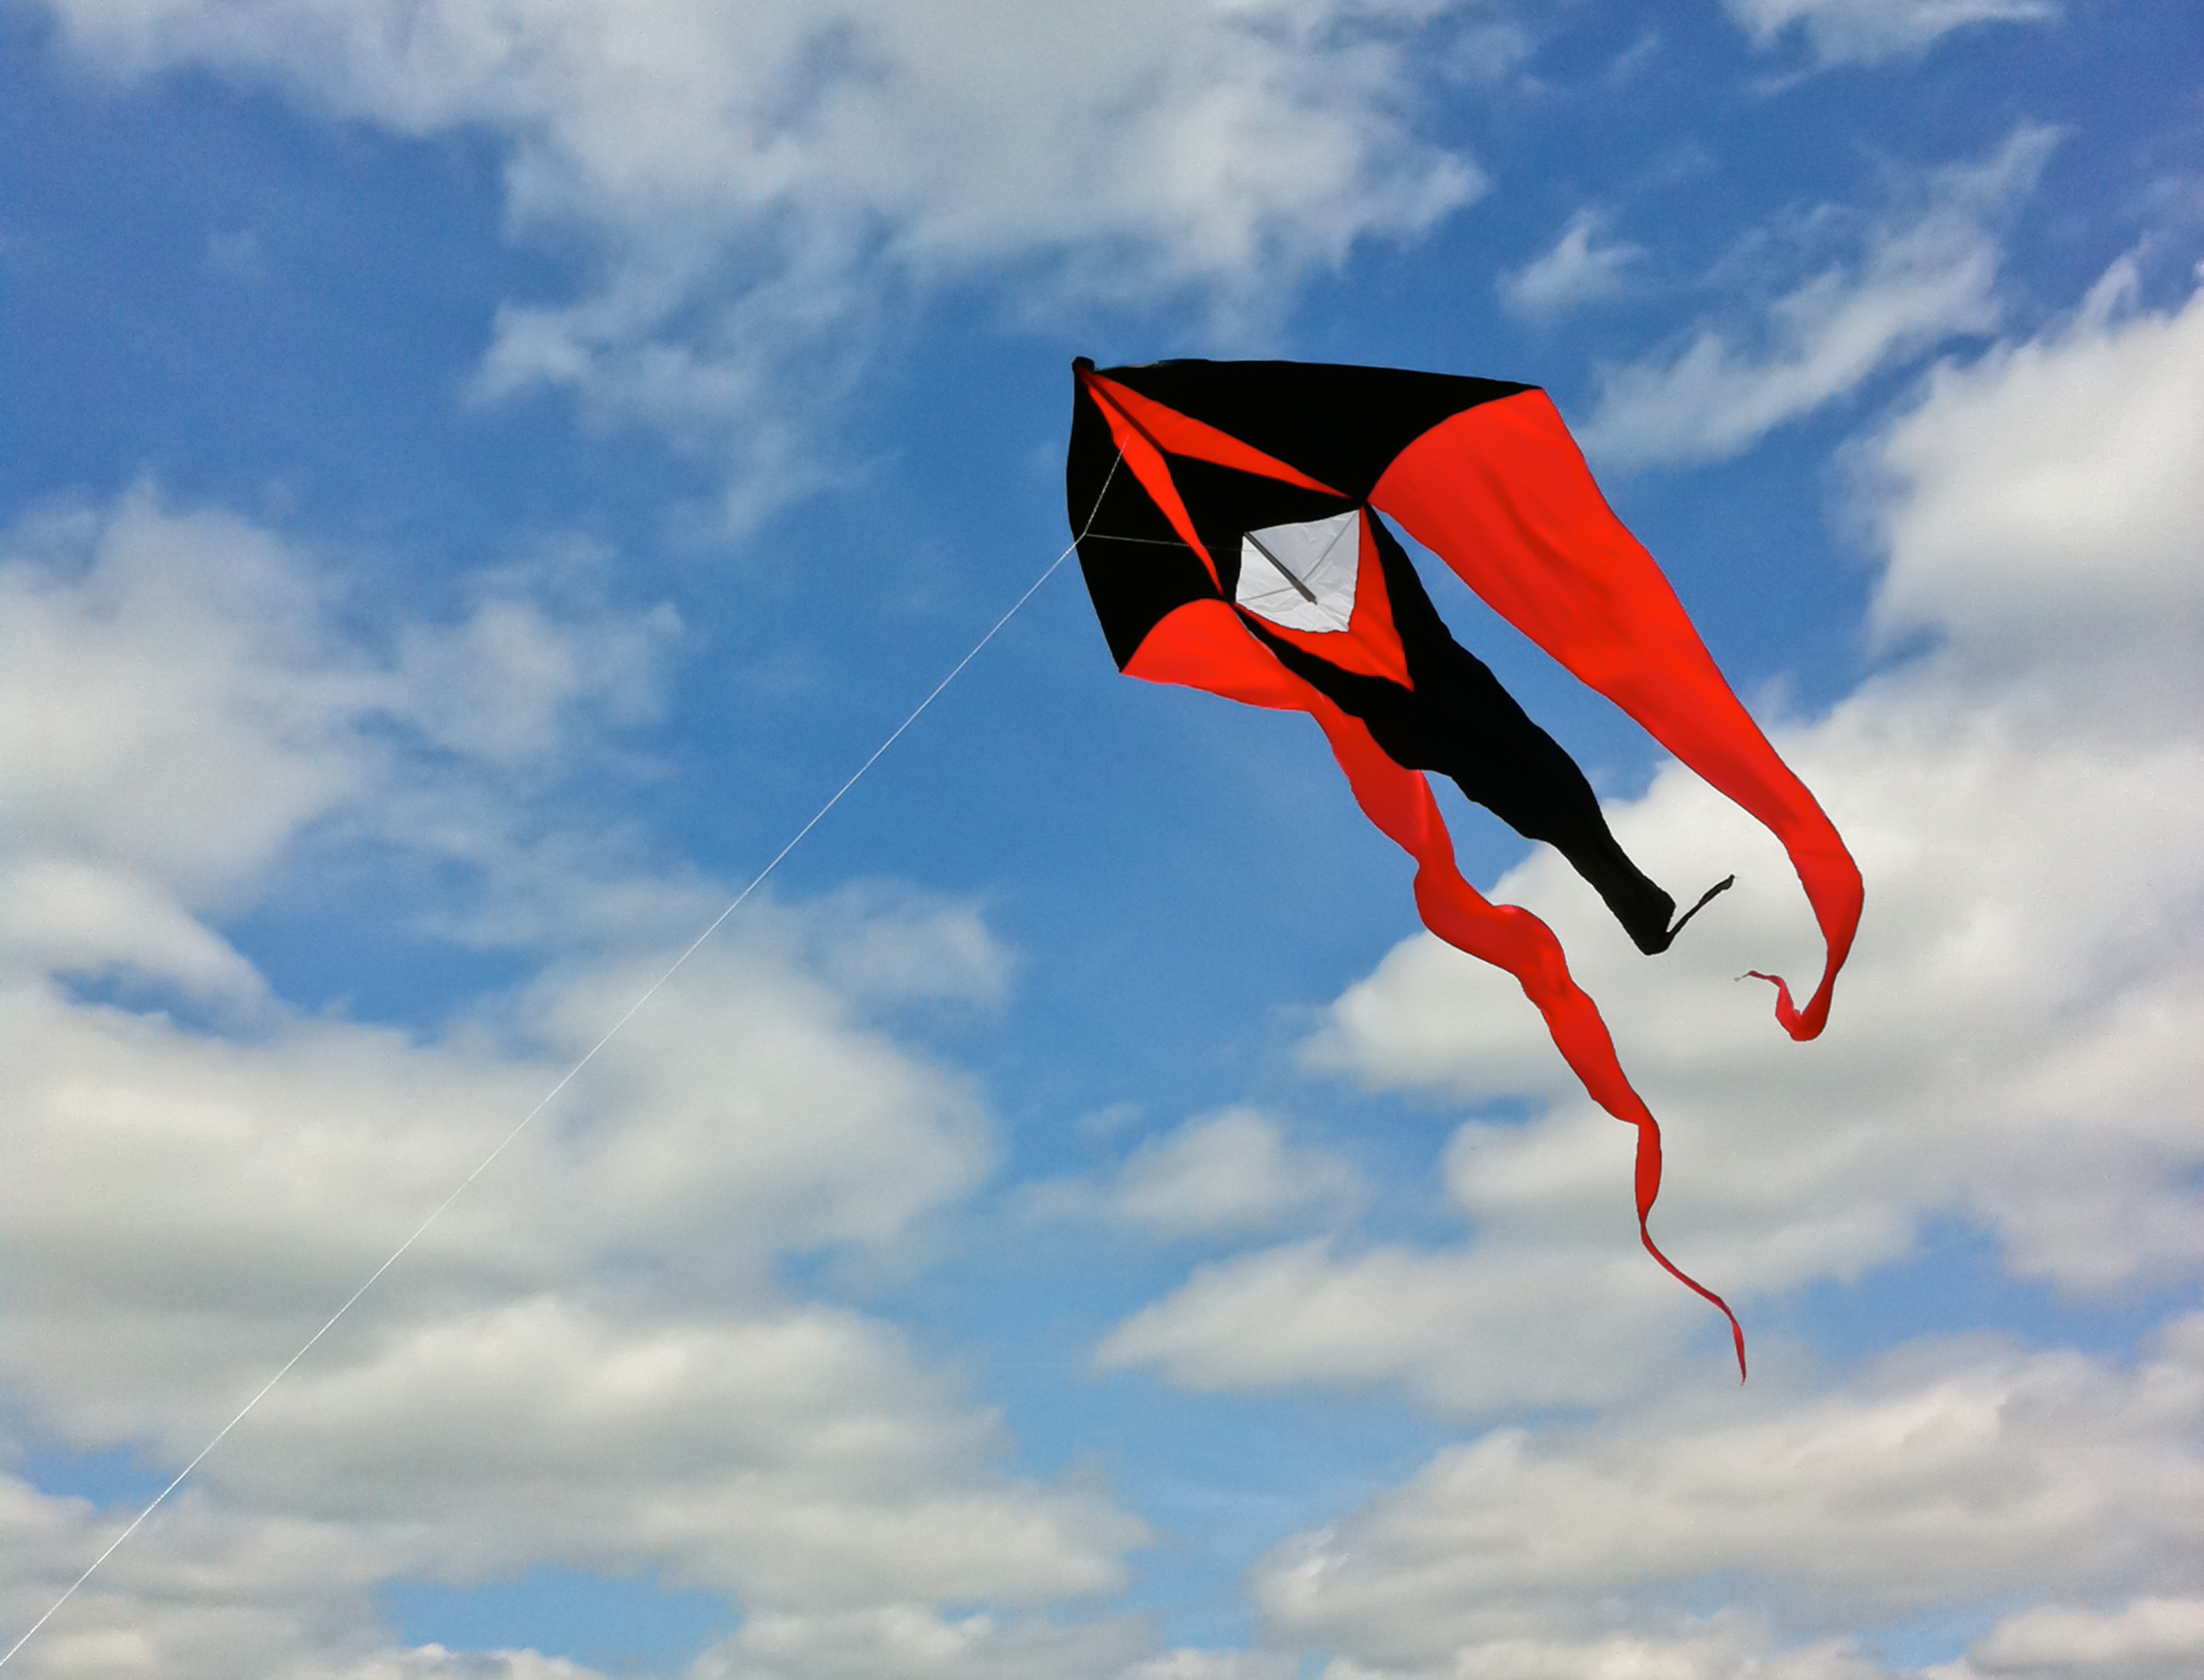 red white and black kite